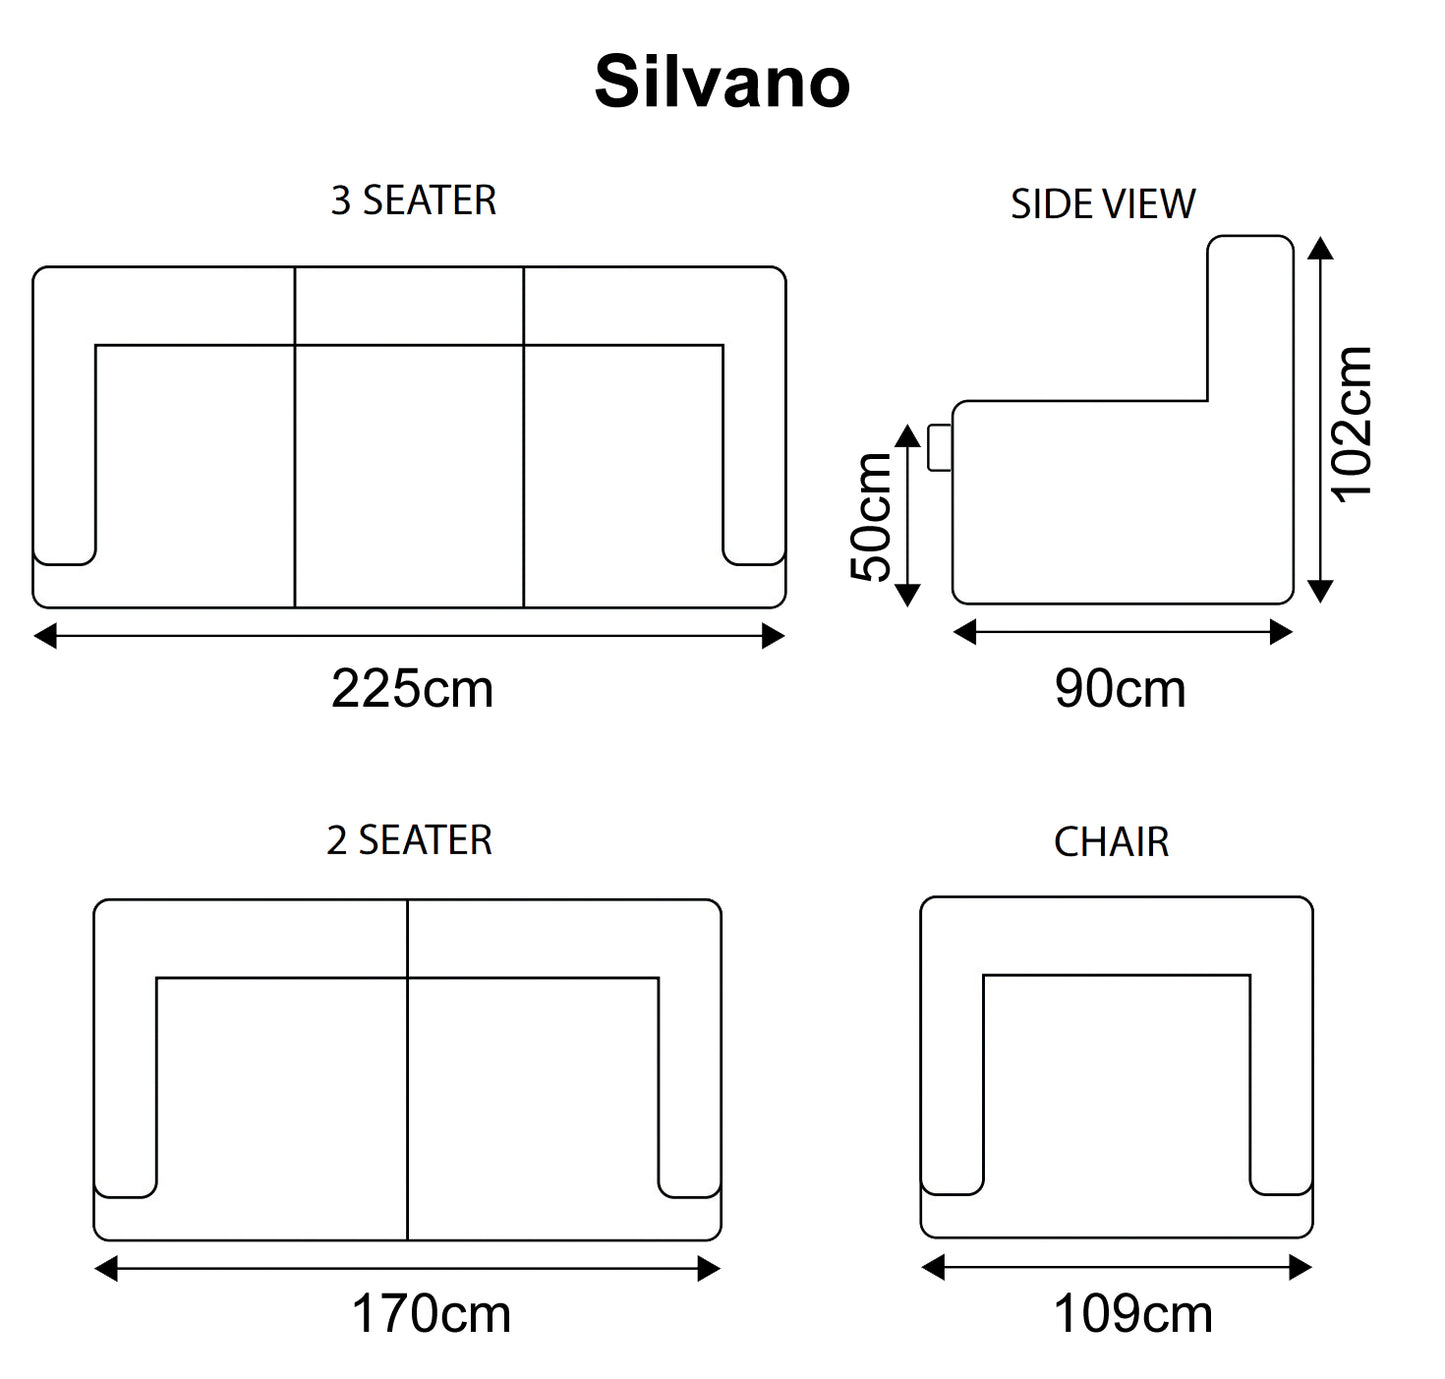 Silvano 2 Seater Recliner